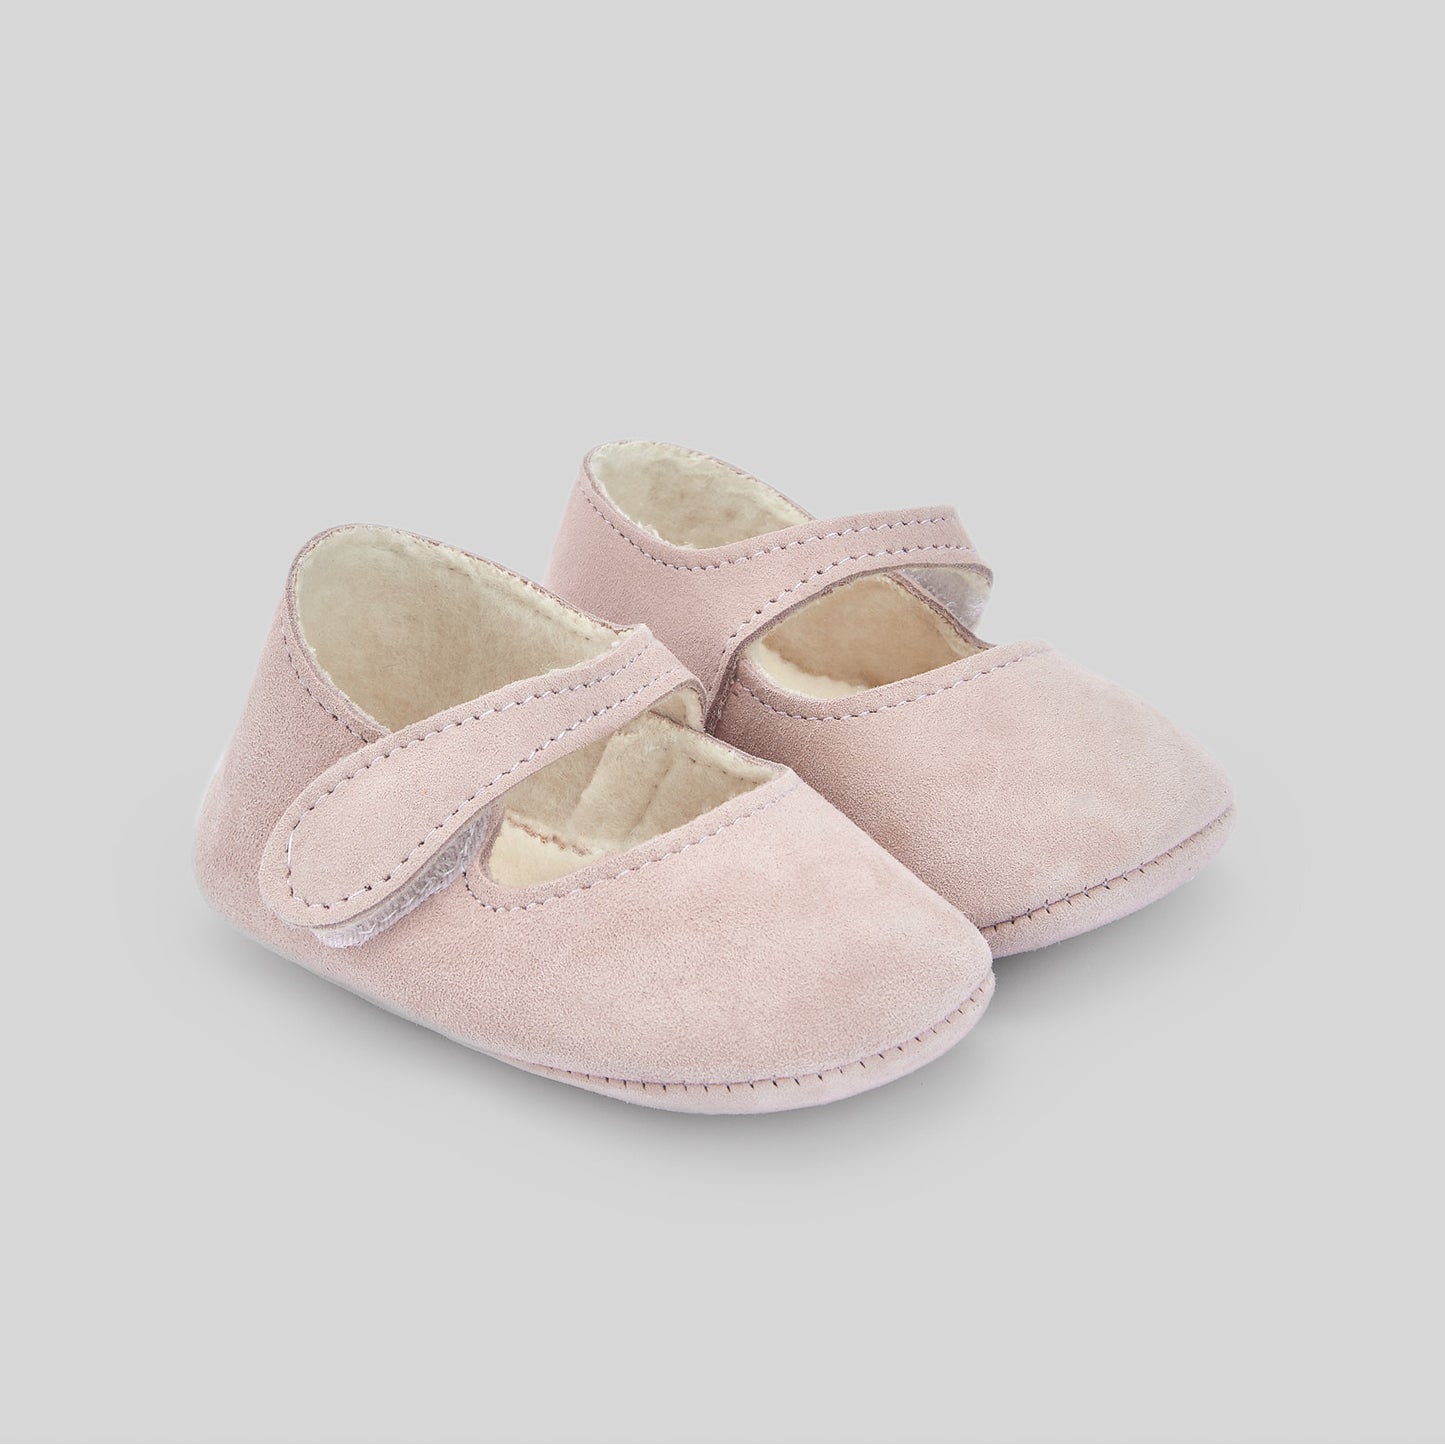 Mist Pink Suede Mary Jane Crib Shoe